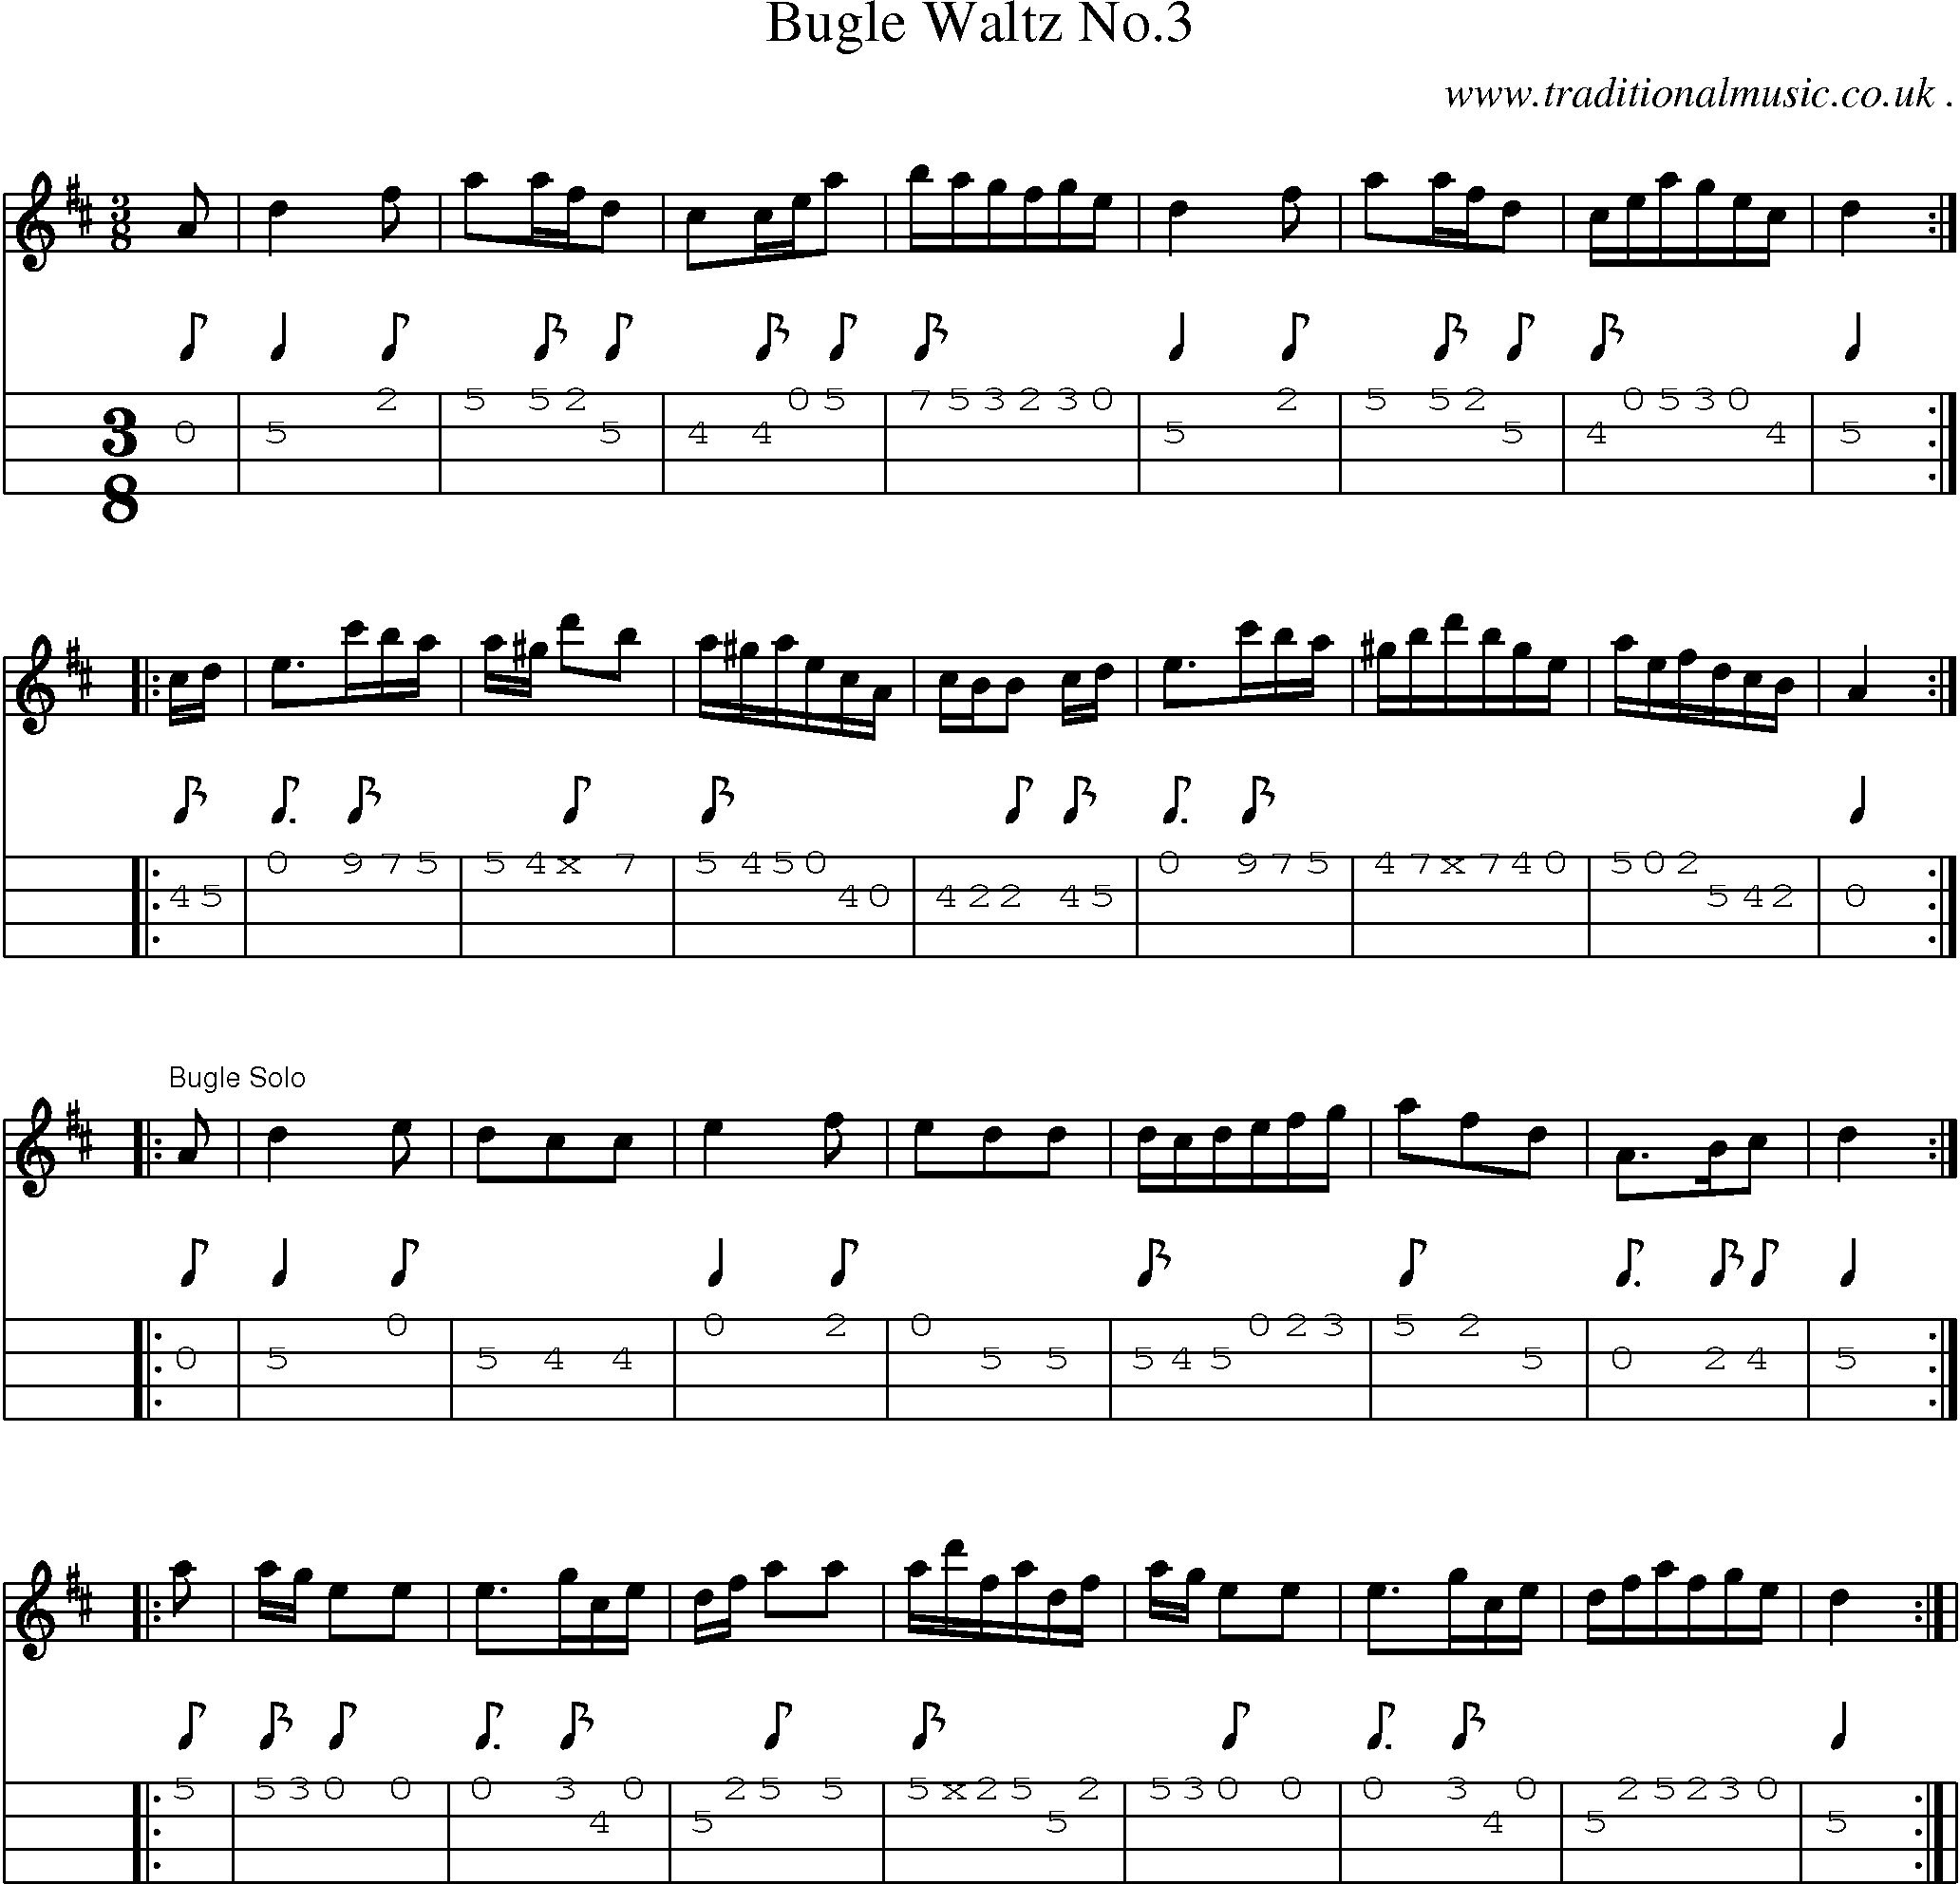 Sheet-Music and Mandolin Tabs for Bugle Waltz No3